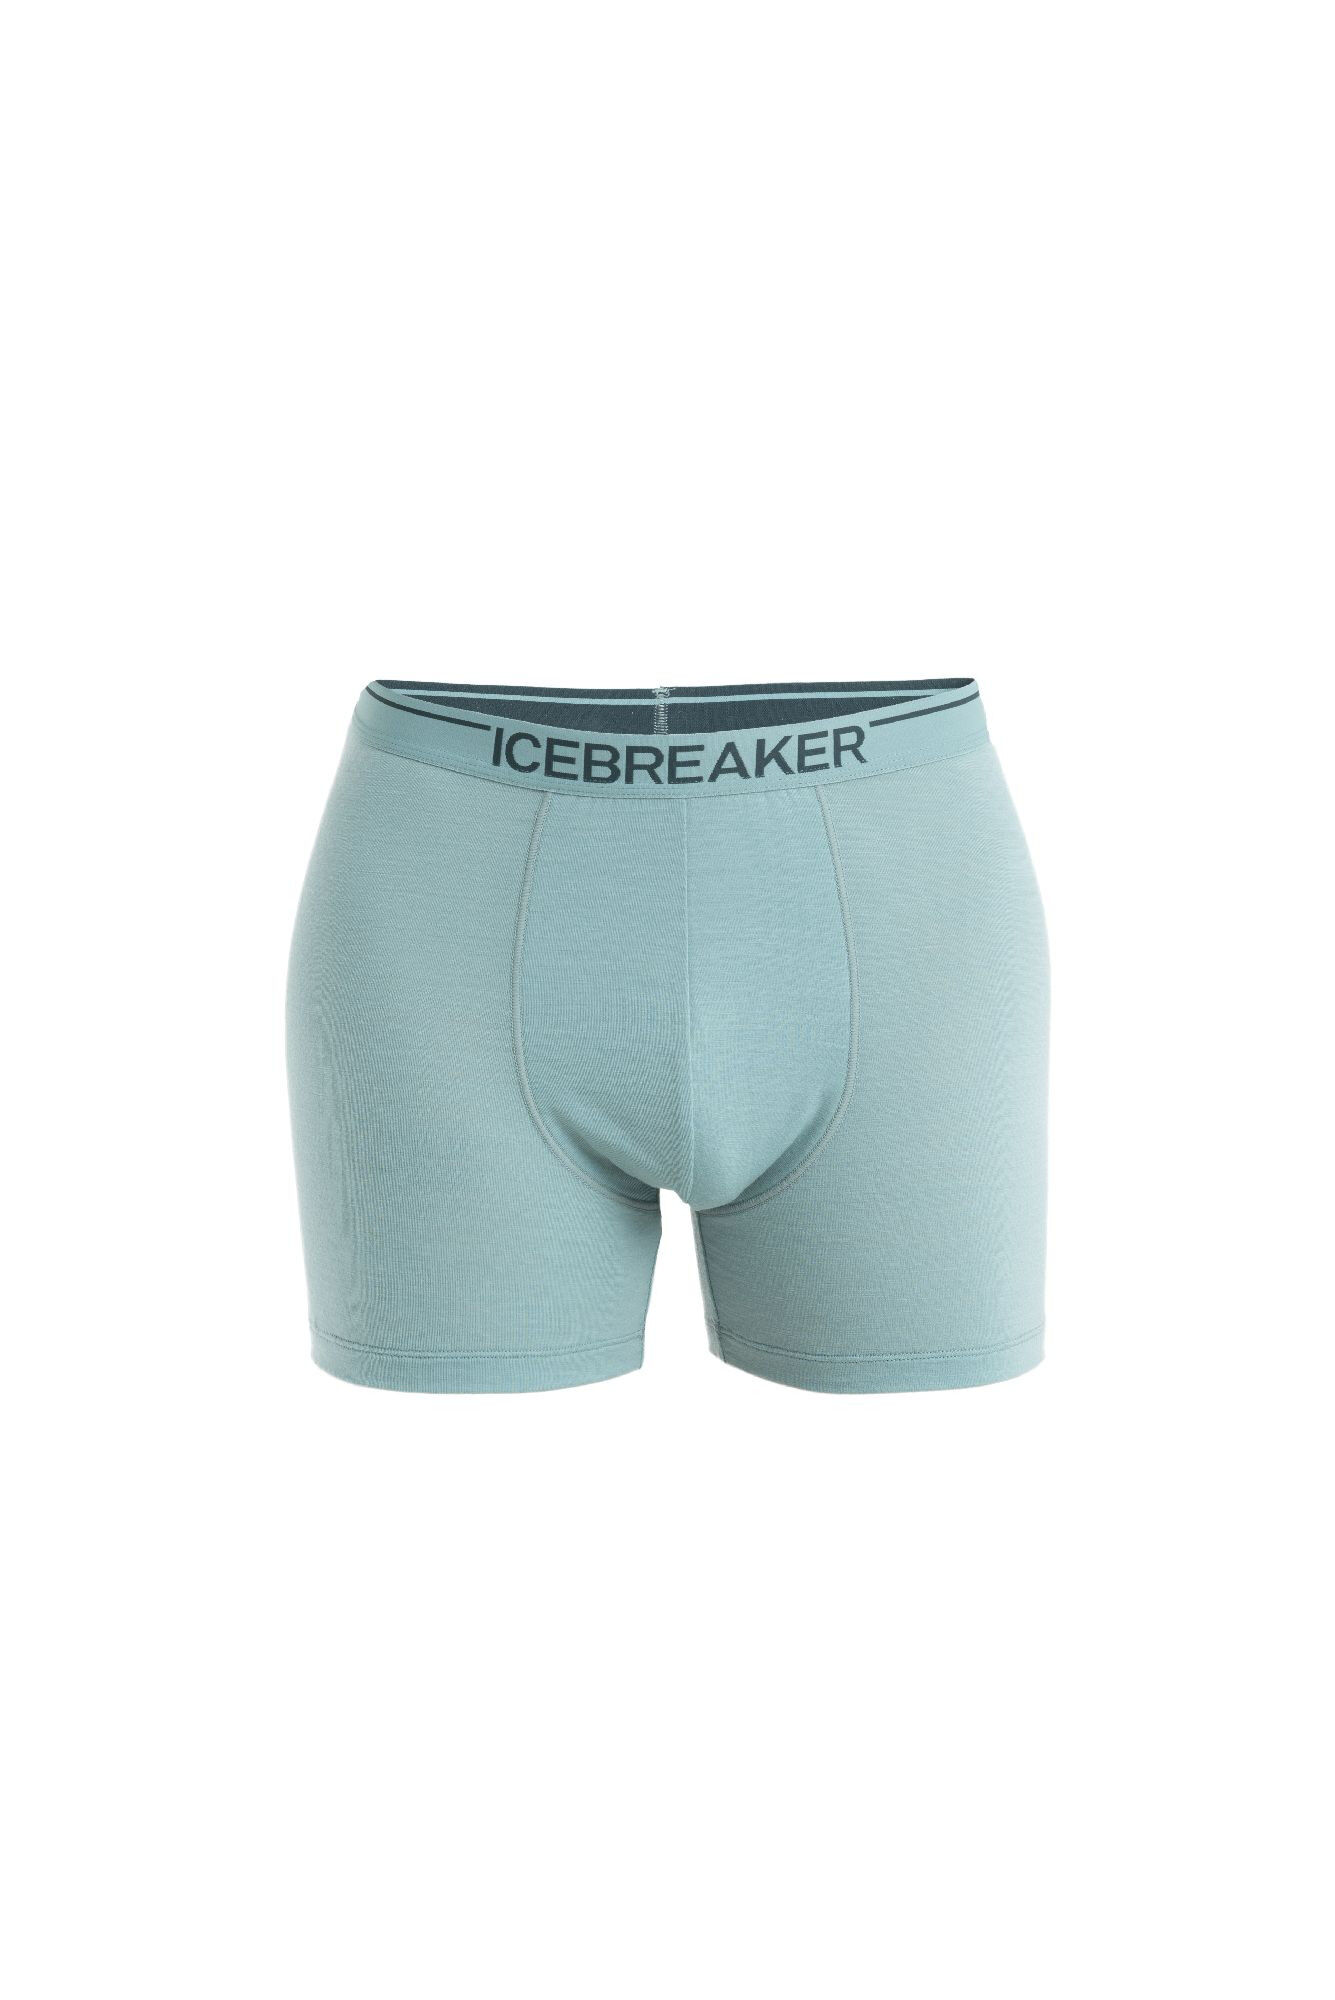 Icebreaker Anatomica Boxers - Ondergoed